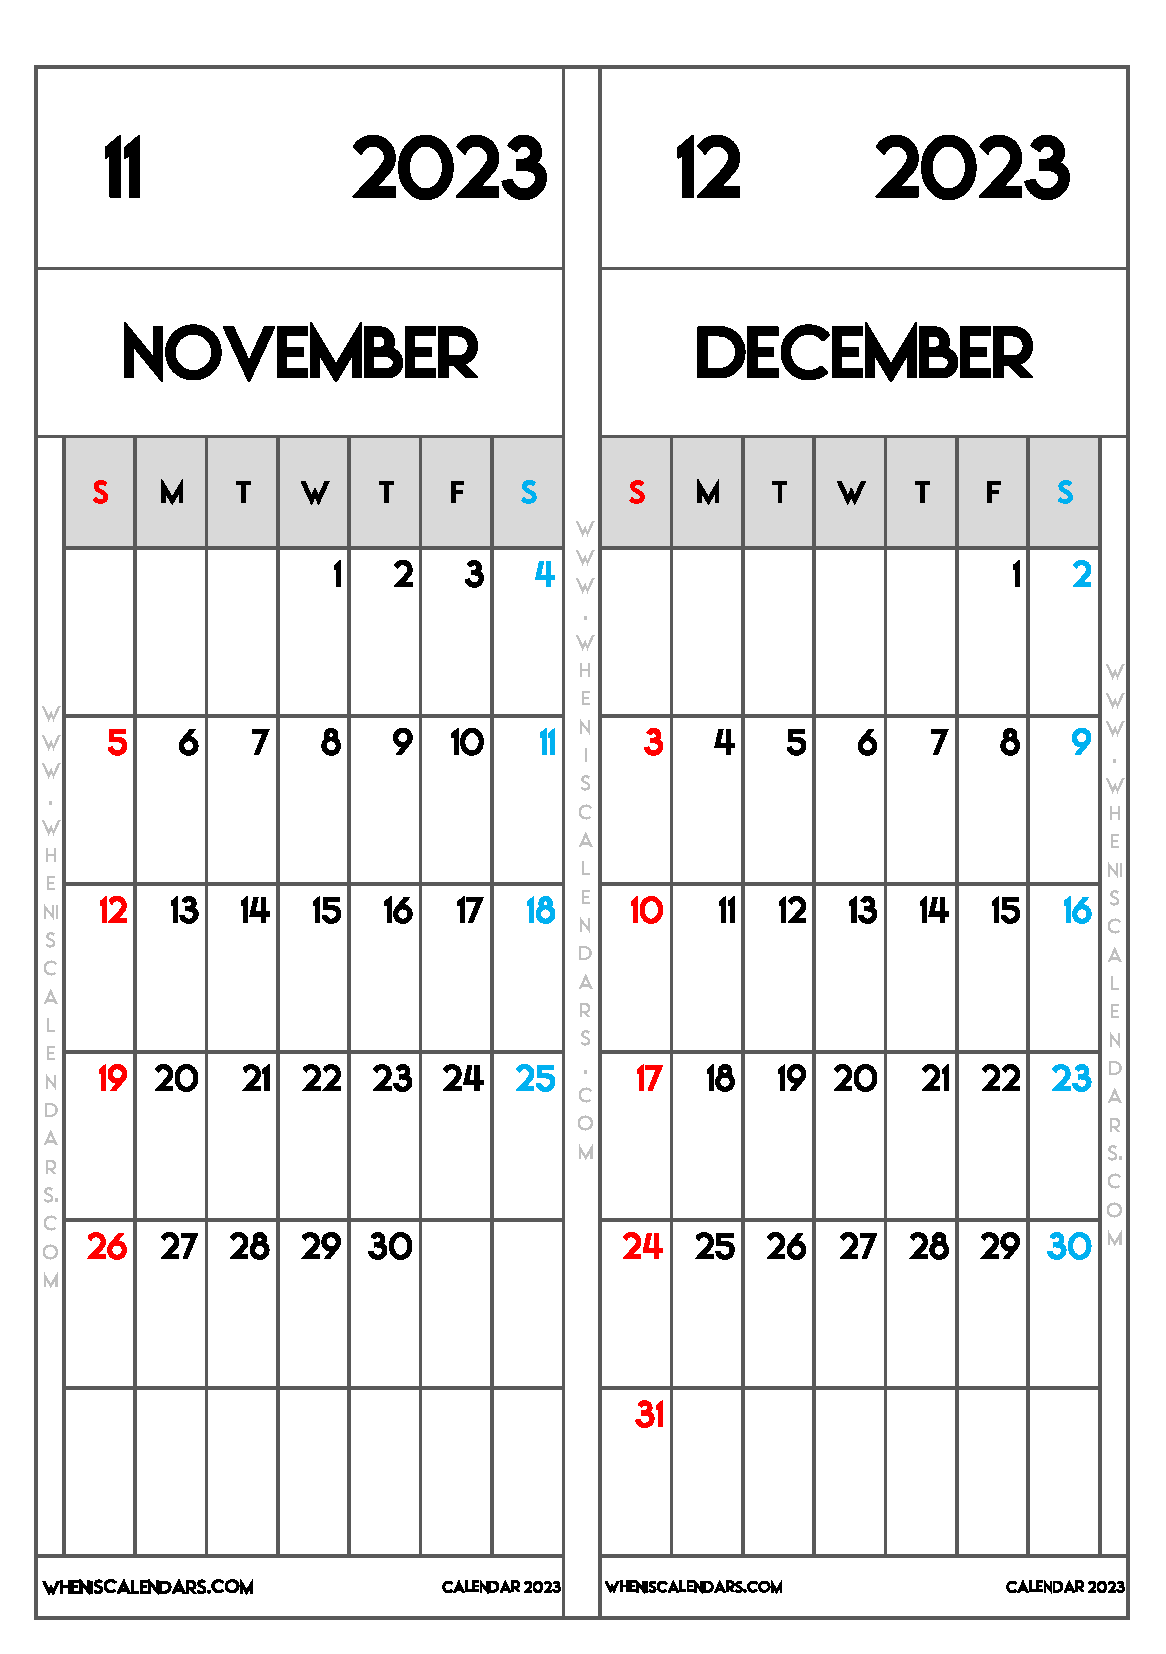 Download Free Printable November December 2023 Calendar as PDF and PNG Image